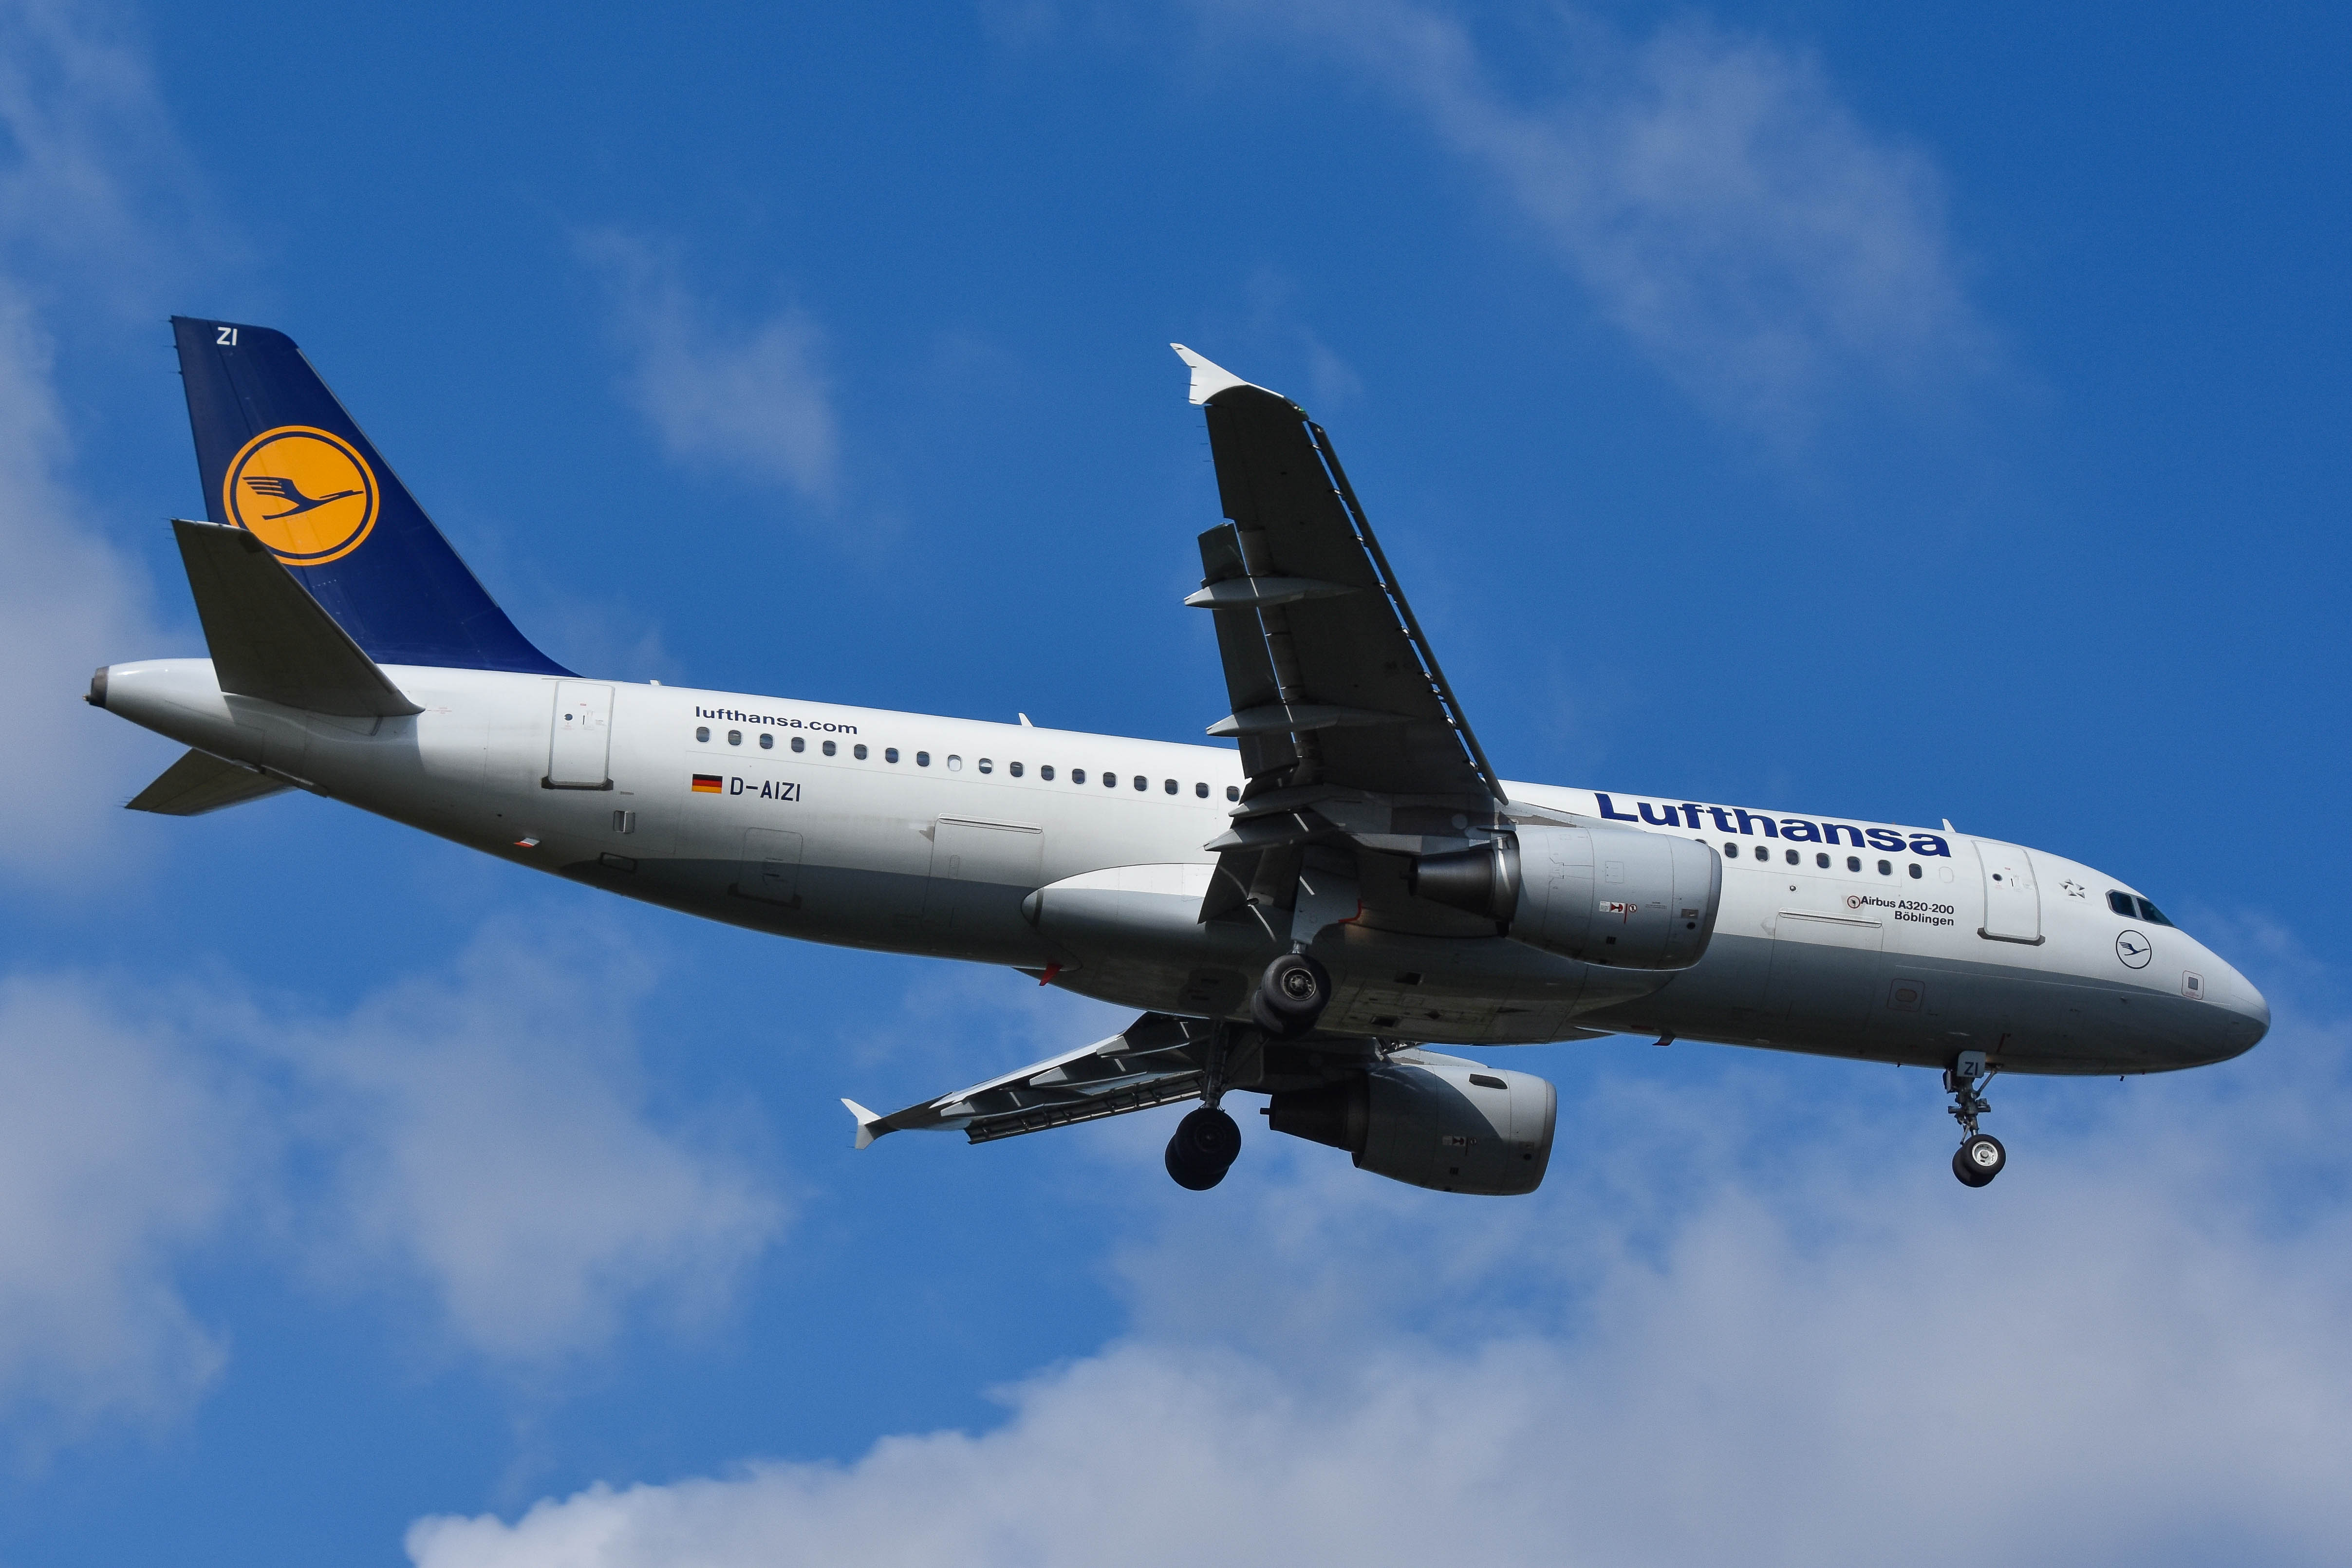 D-AIZI/DAIZI Lufthansa Airbus A320 Airframe Information - AVSpotters.com